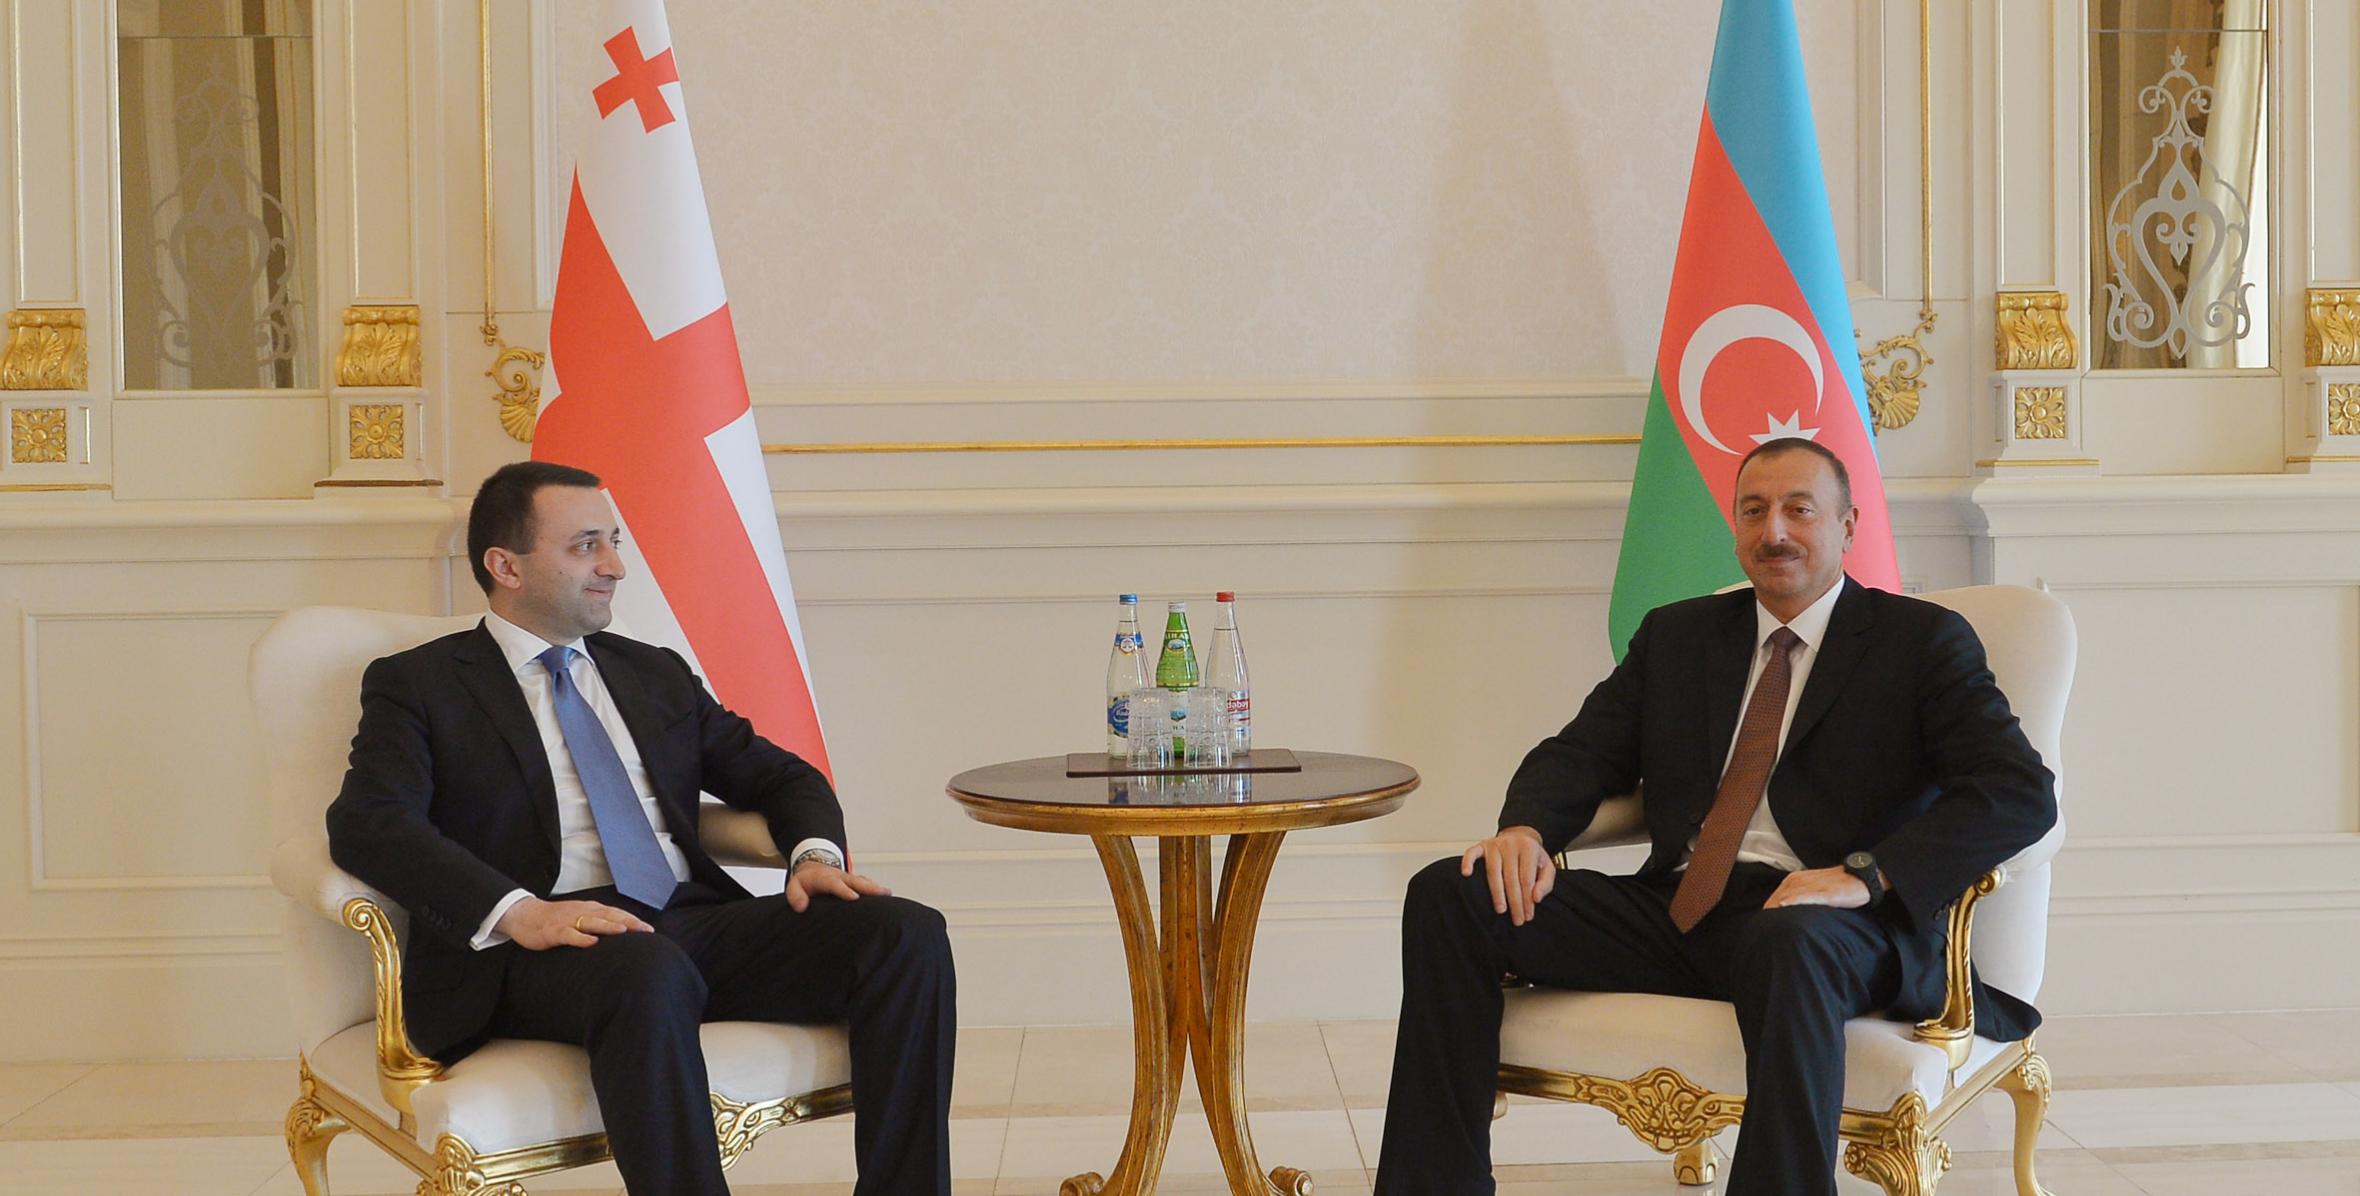 Ilham Aliyev and Georgian Prime Minister Irakli Garibashvili had a one-on-one meeting